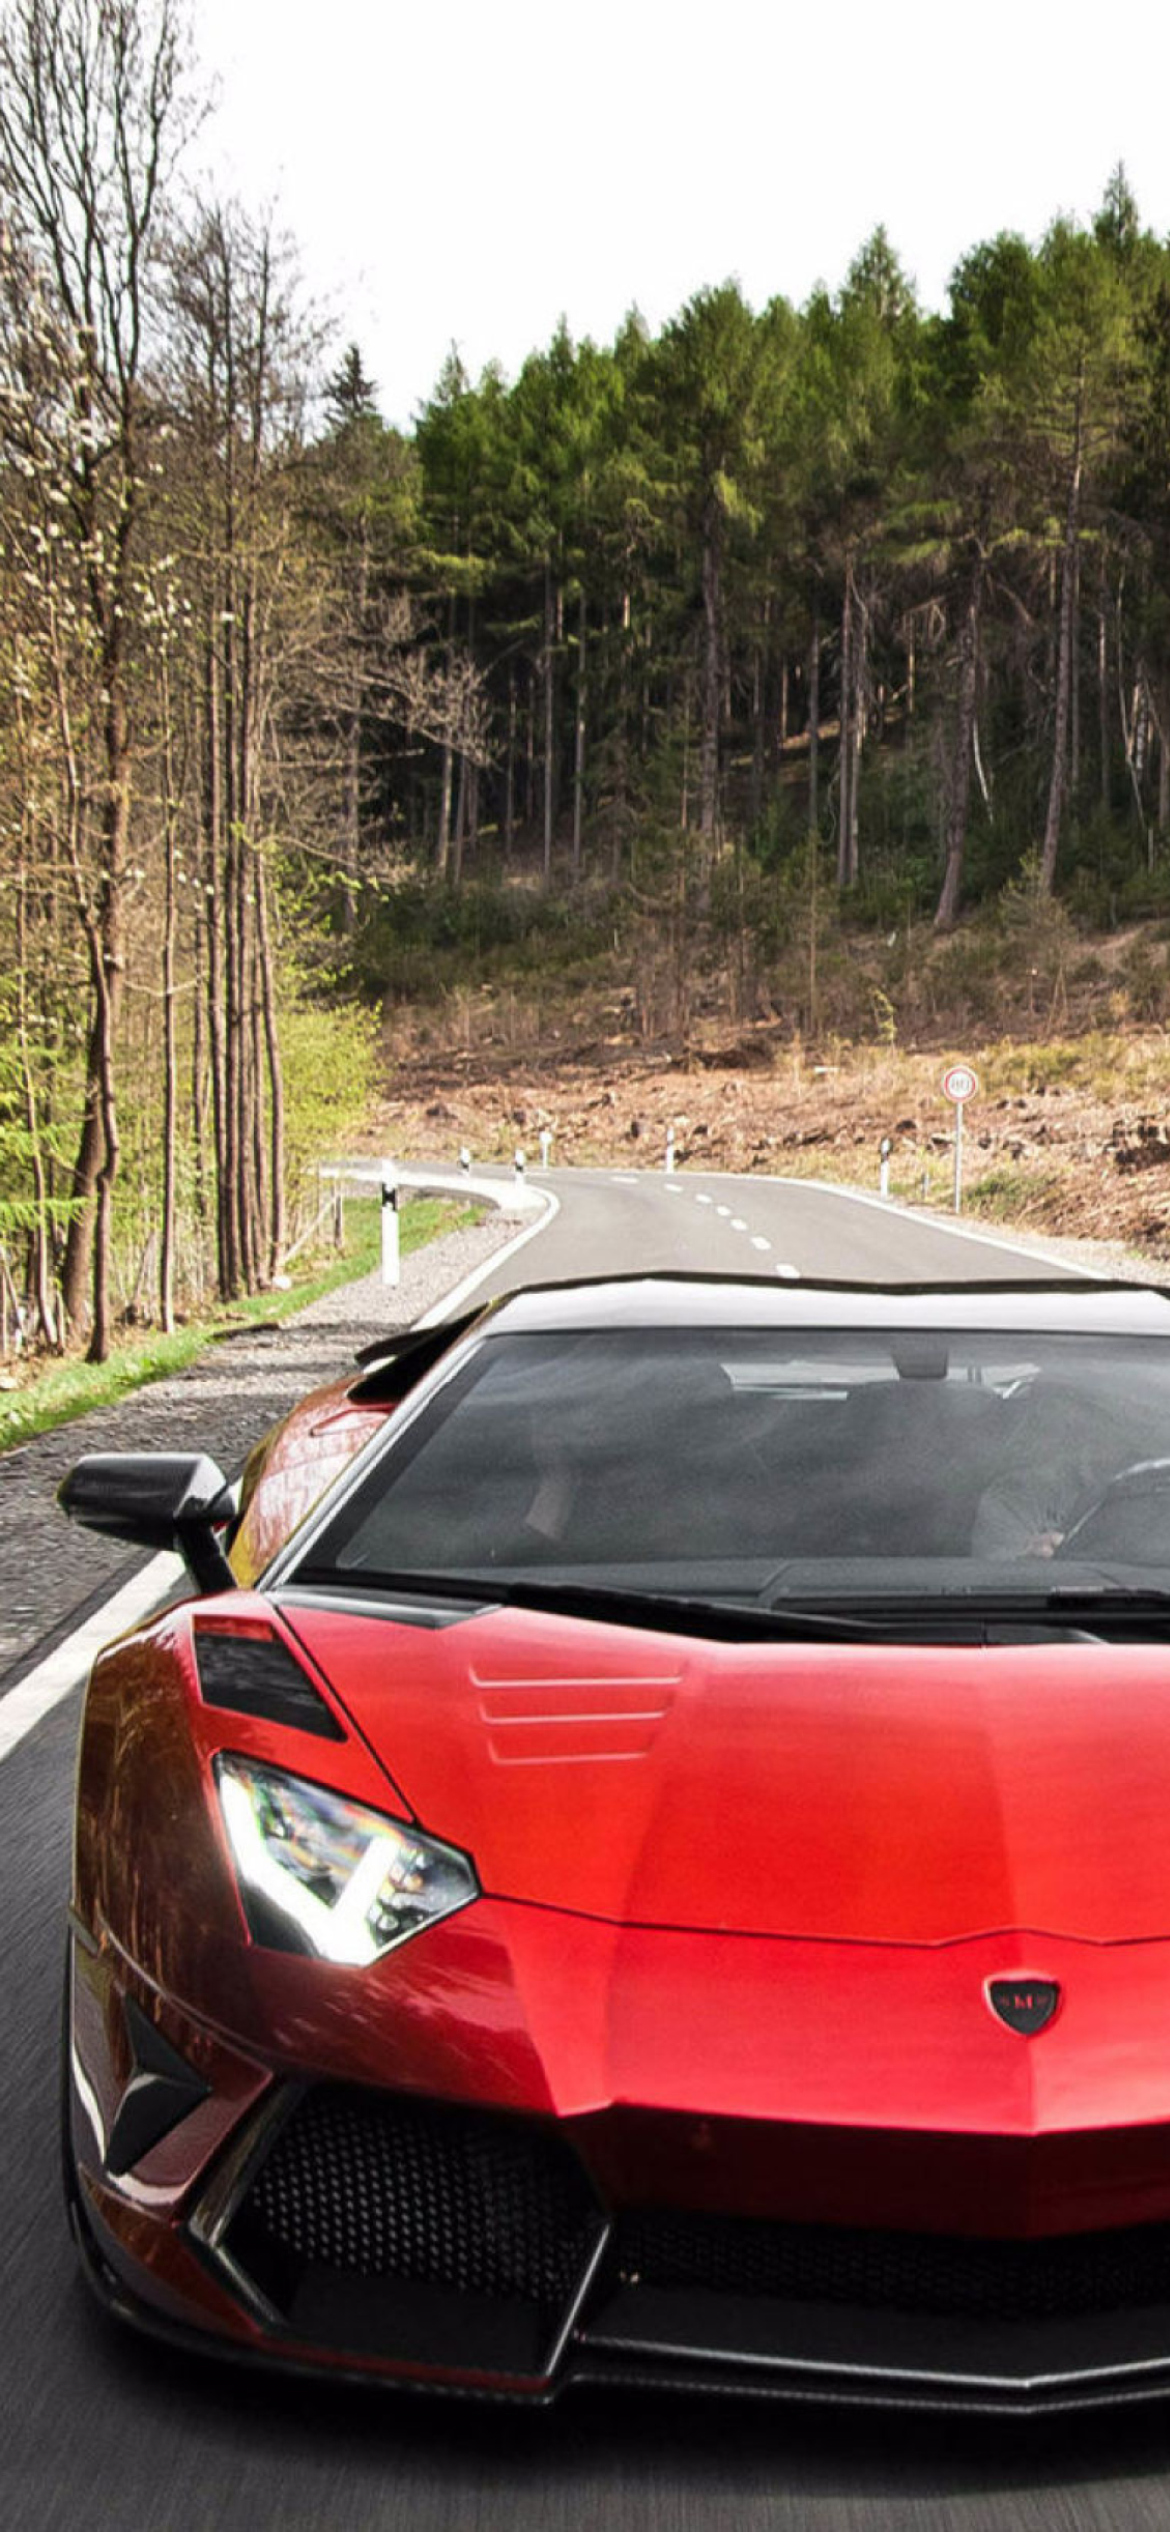 Lamborghini Aventador Mansory - Fondos de pantalla gratis para iPhone 12 Pro